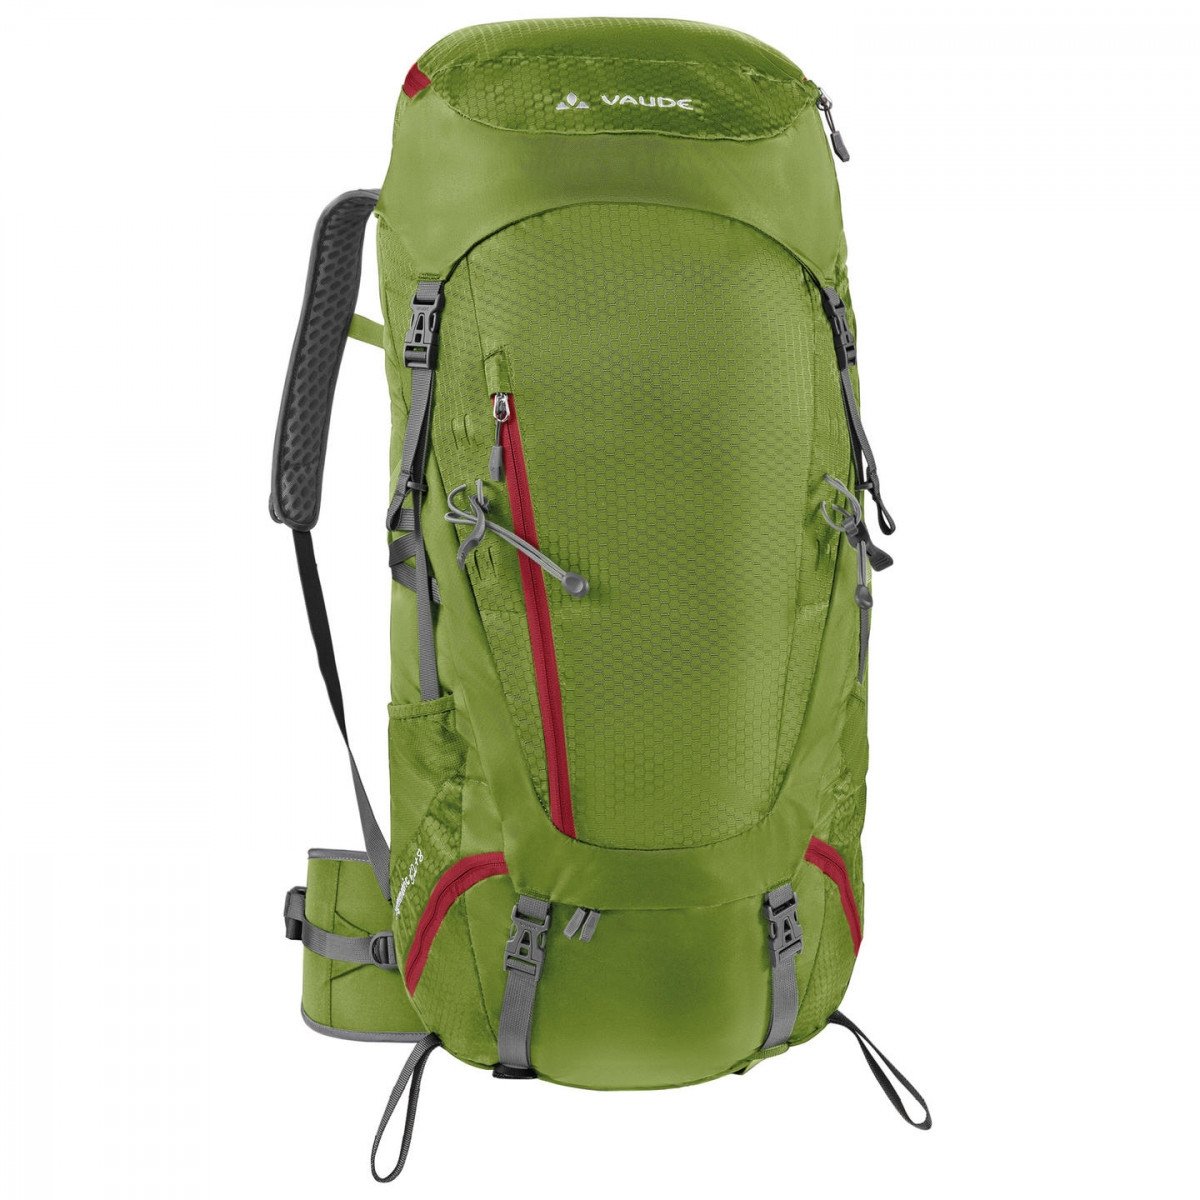 Рюкзак VAUDE Asymmetric, 52+8 л, 785, green, 11744 рюкзак переноска waterland keylime green